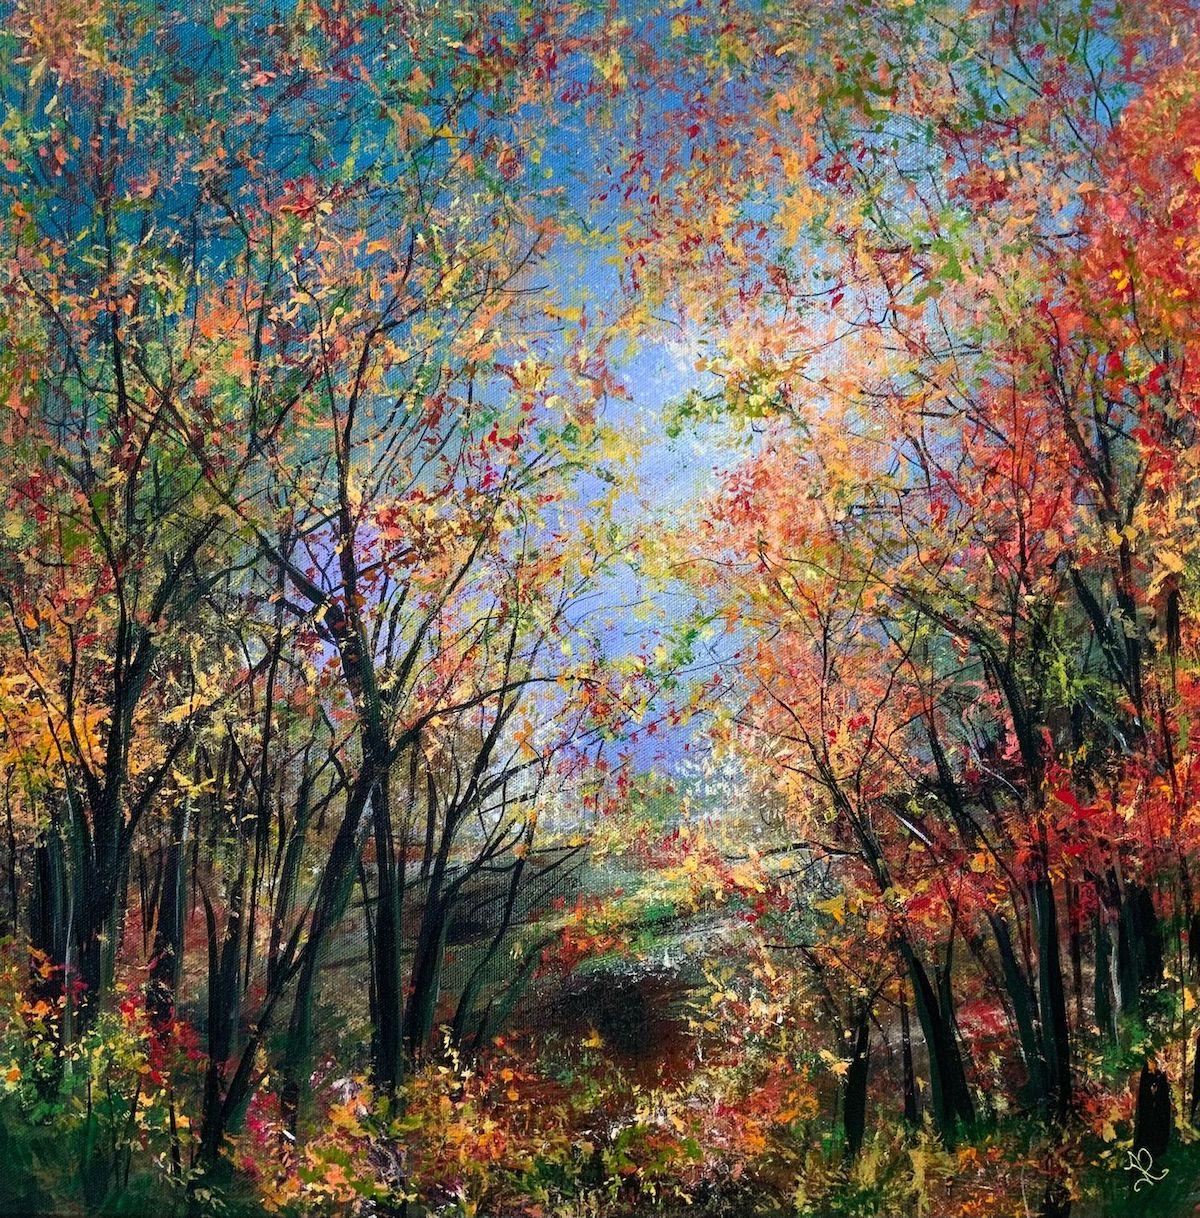 Abstract Painting Jan Rogers  - Autumn Blaze Fairy Glen par Jan Rogers, paysage contemporain, art forestier